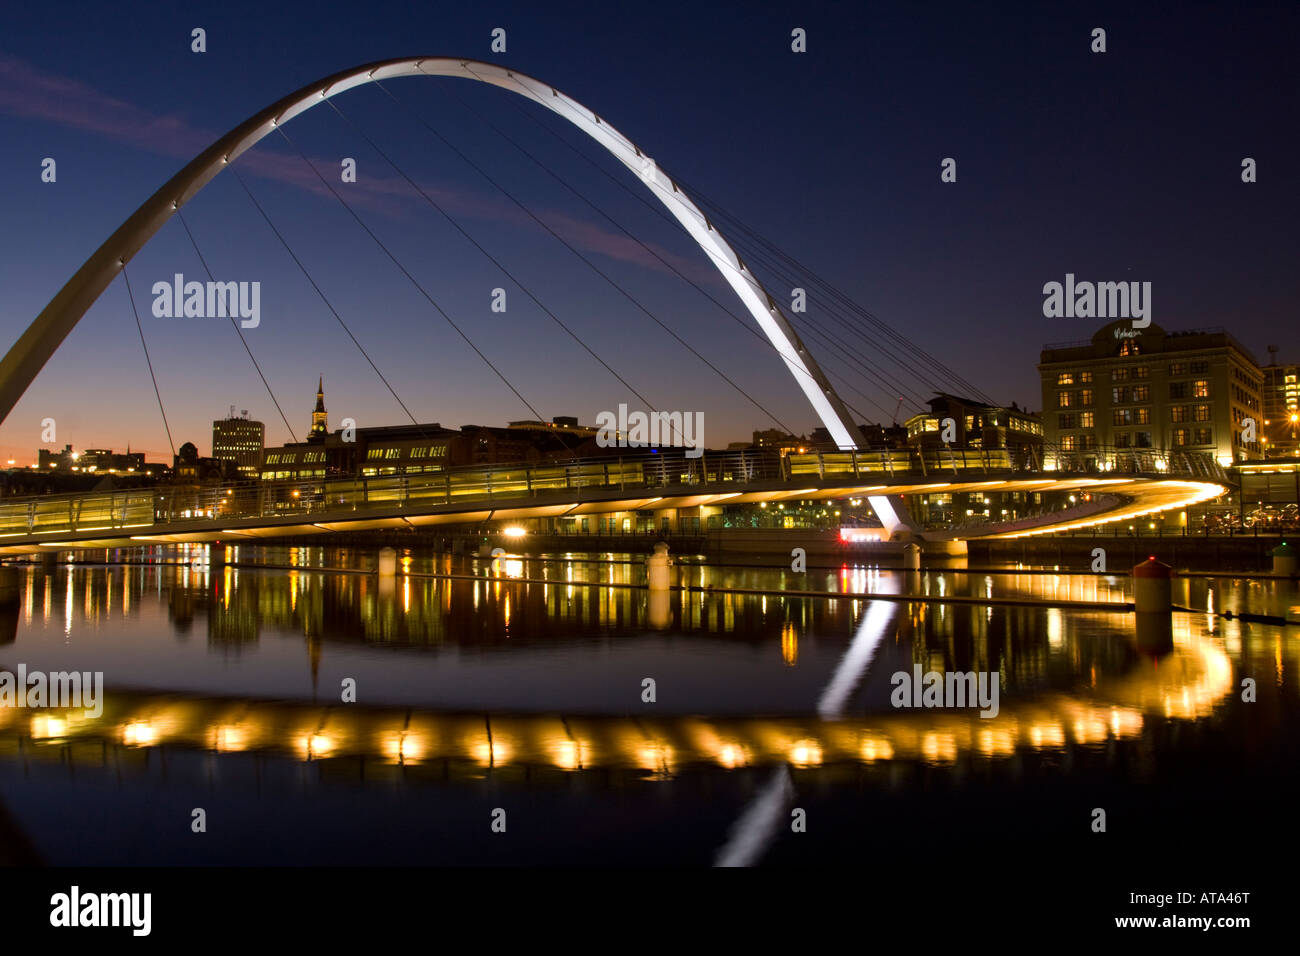 Inglaterra Newcastle Gateshead Millennium Bridge de noche se refleja en el río Tyne Foto de stock